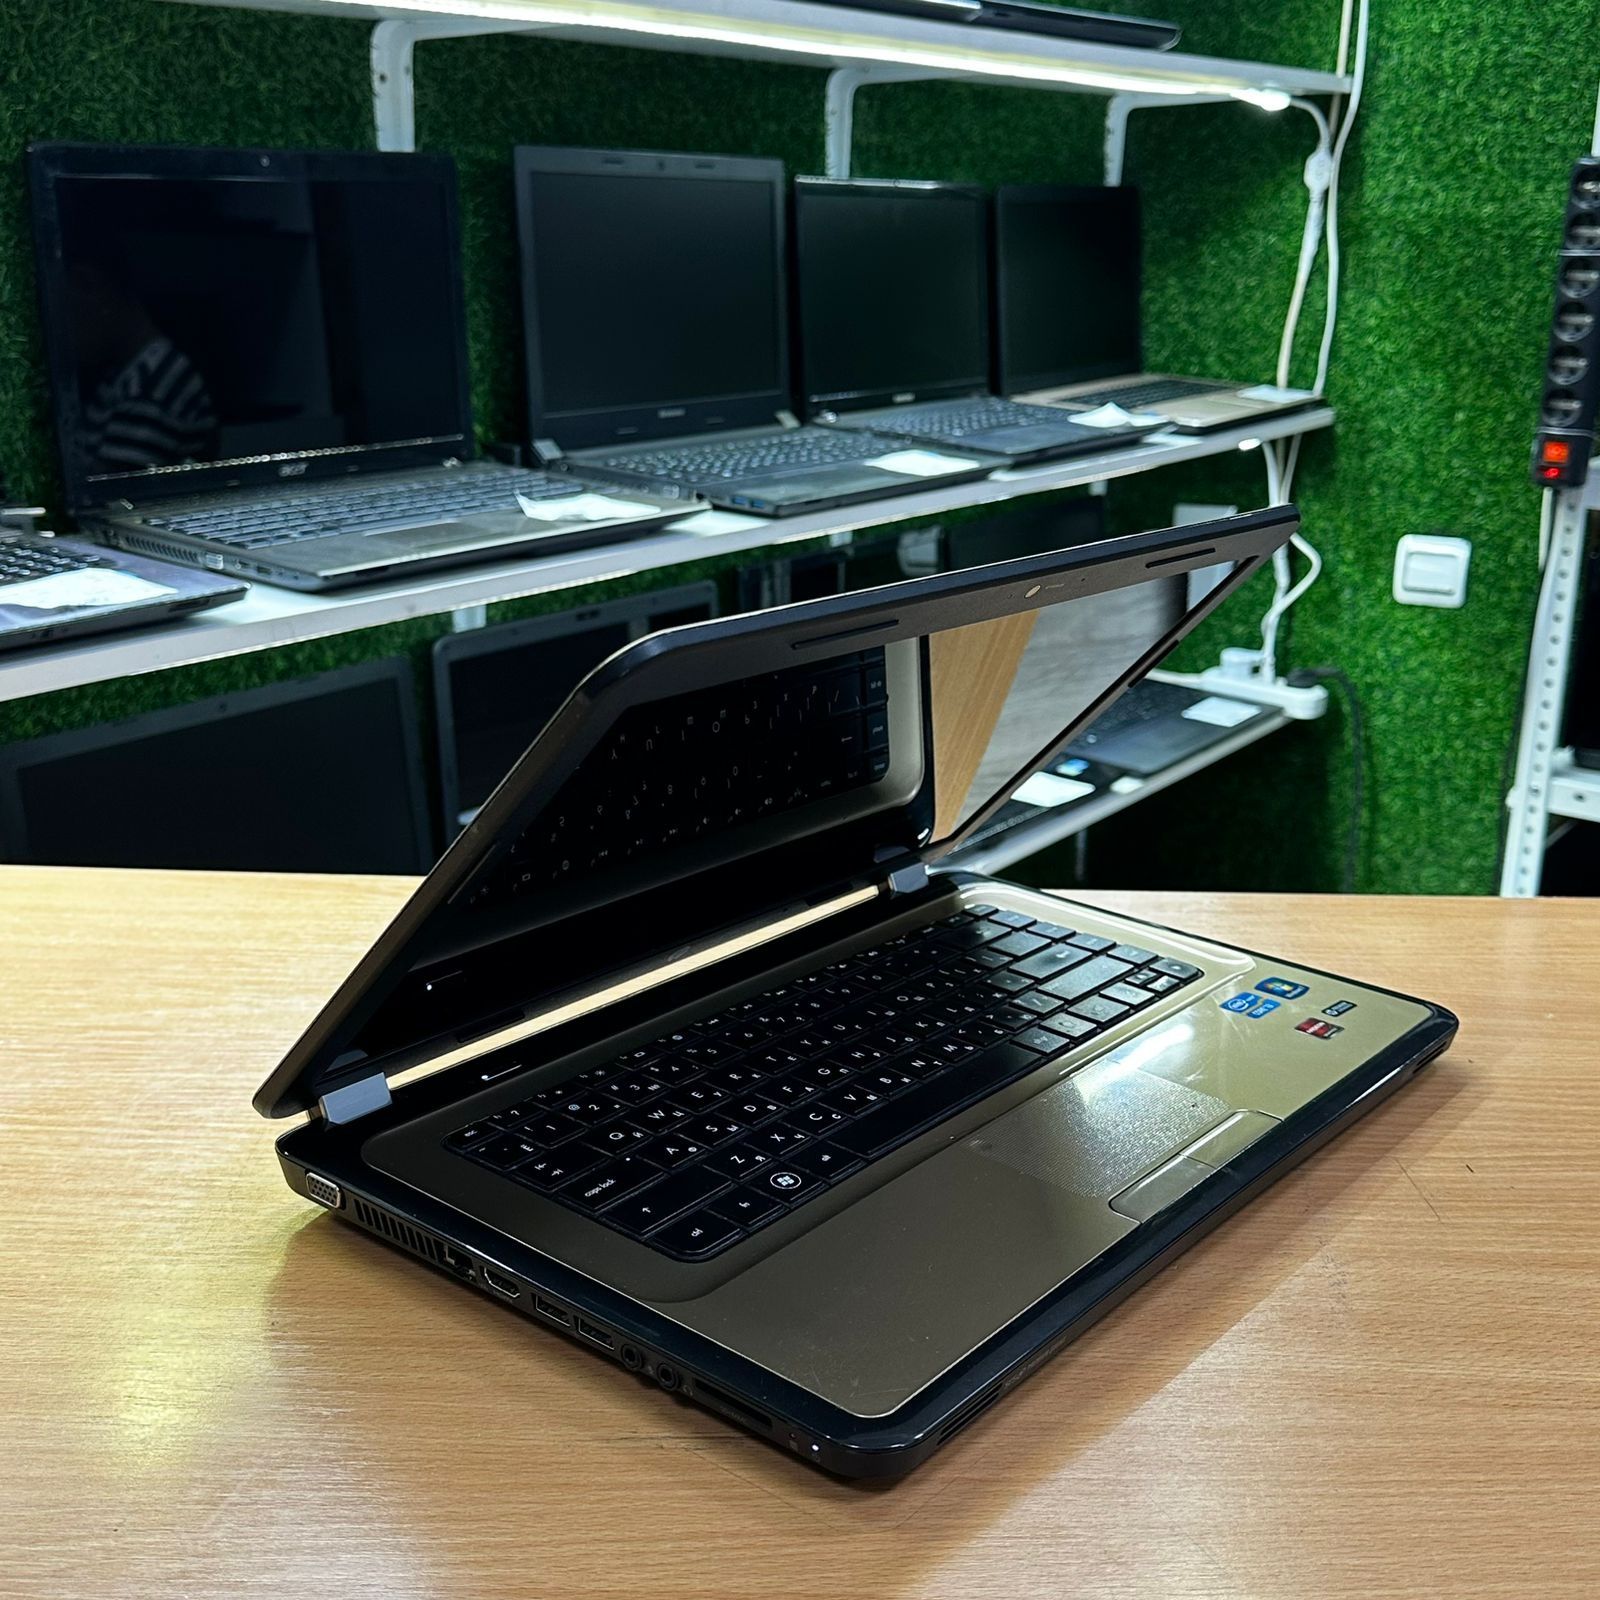 Ноутбук Hp g6 для офиса шустрый Core i3 ОЗУ 6Gb ssd 128Gb+500Gb